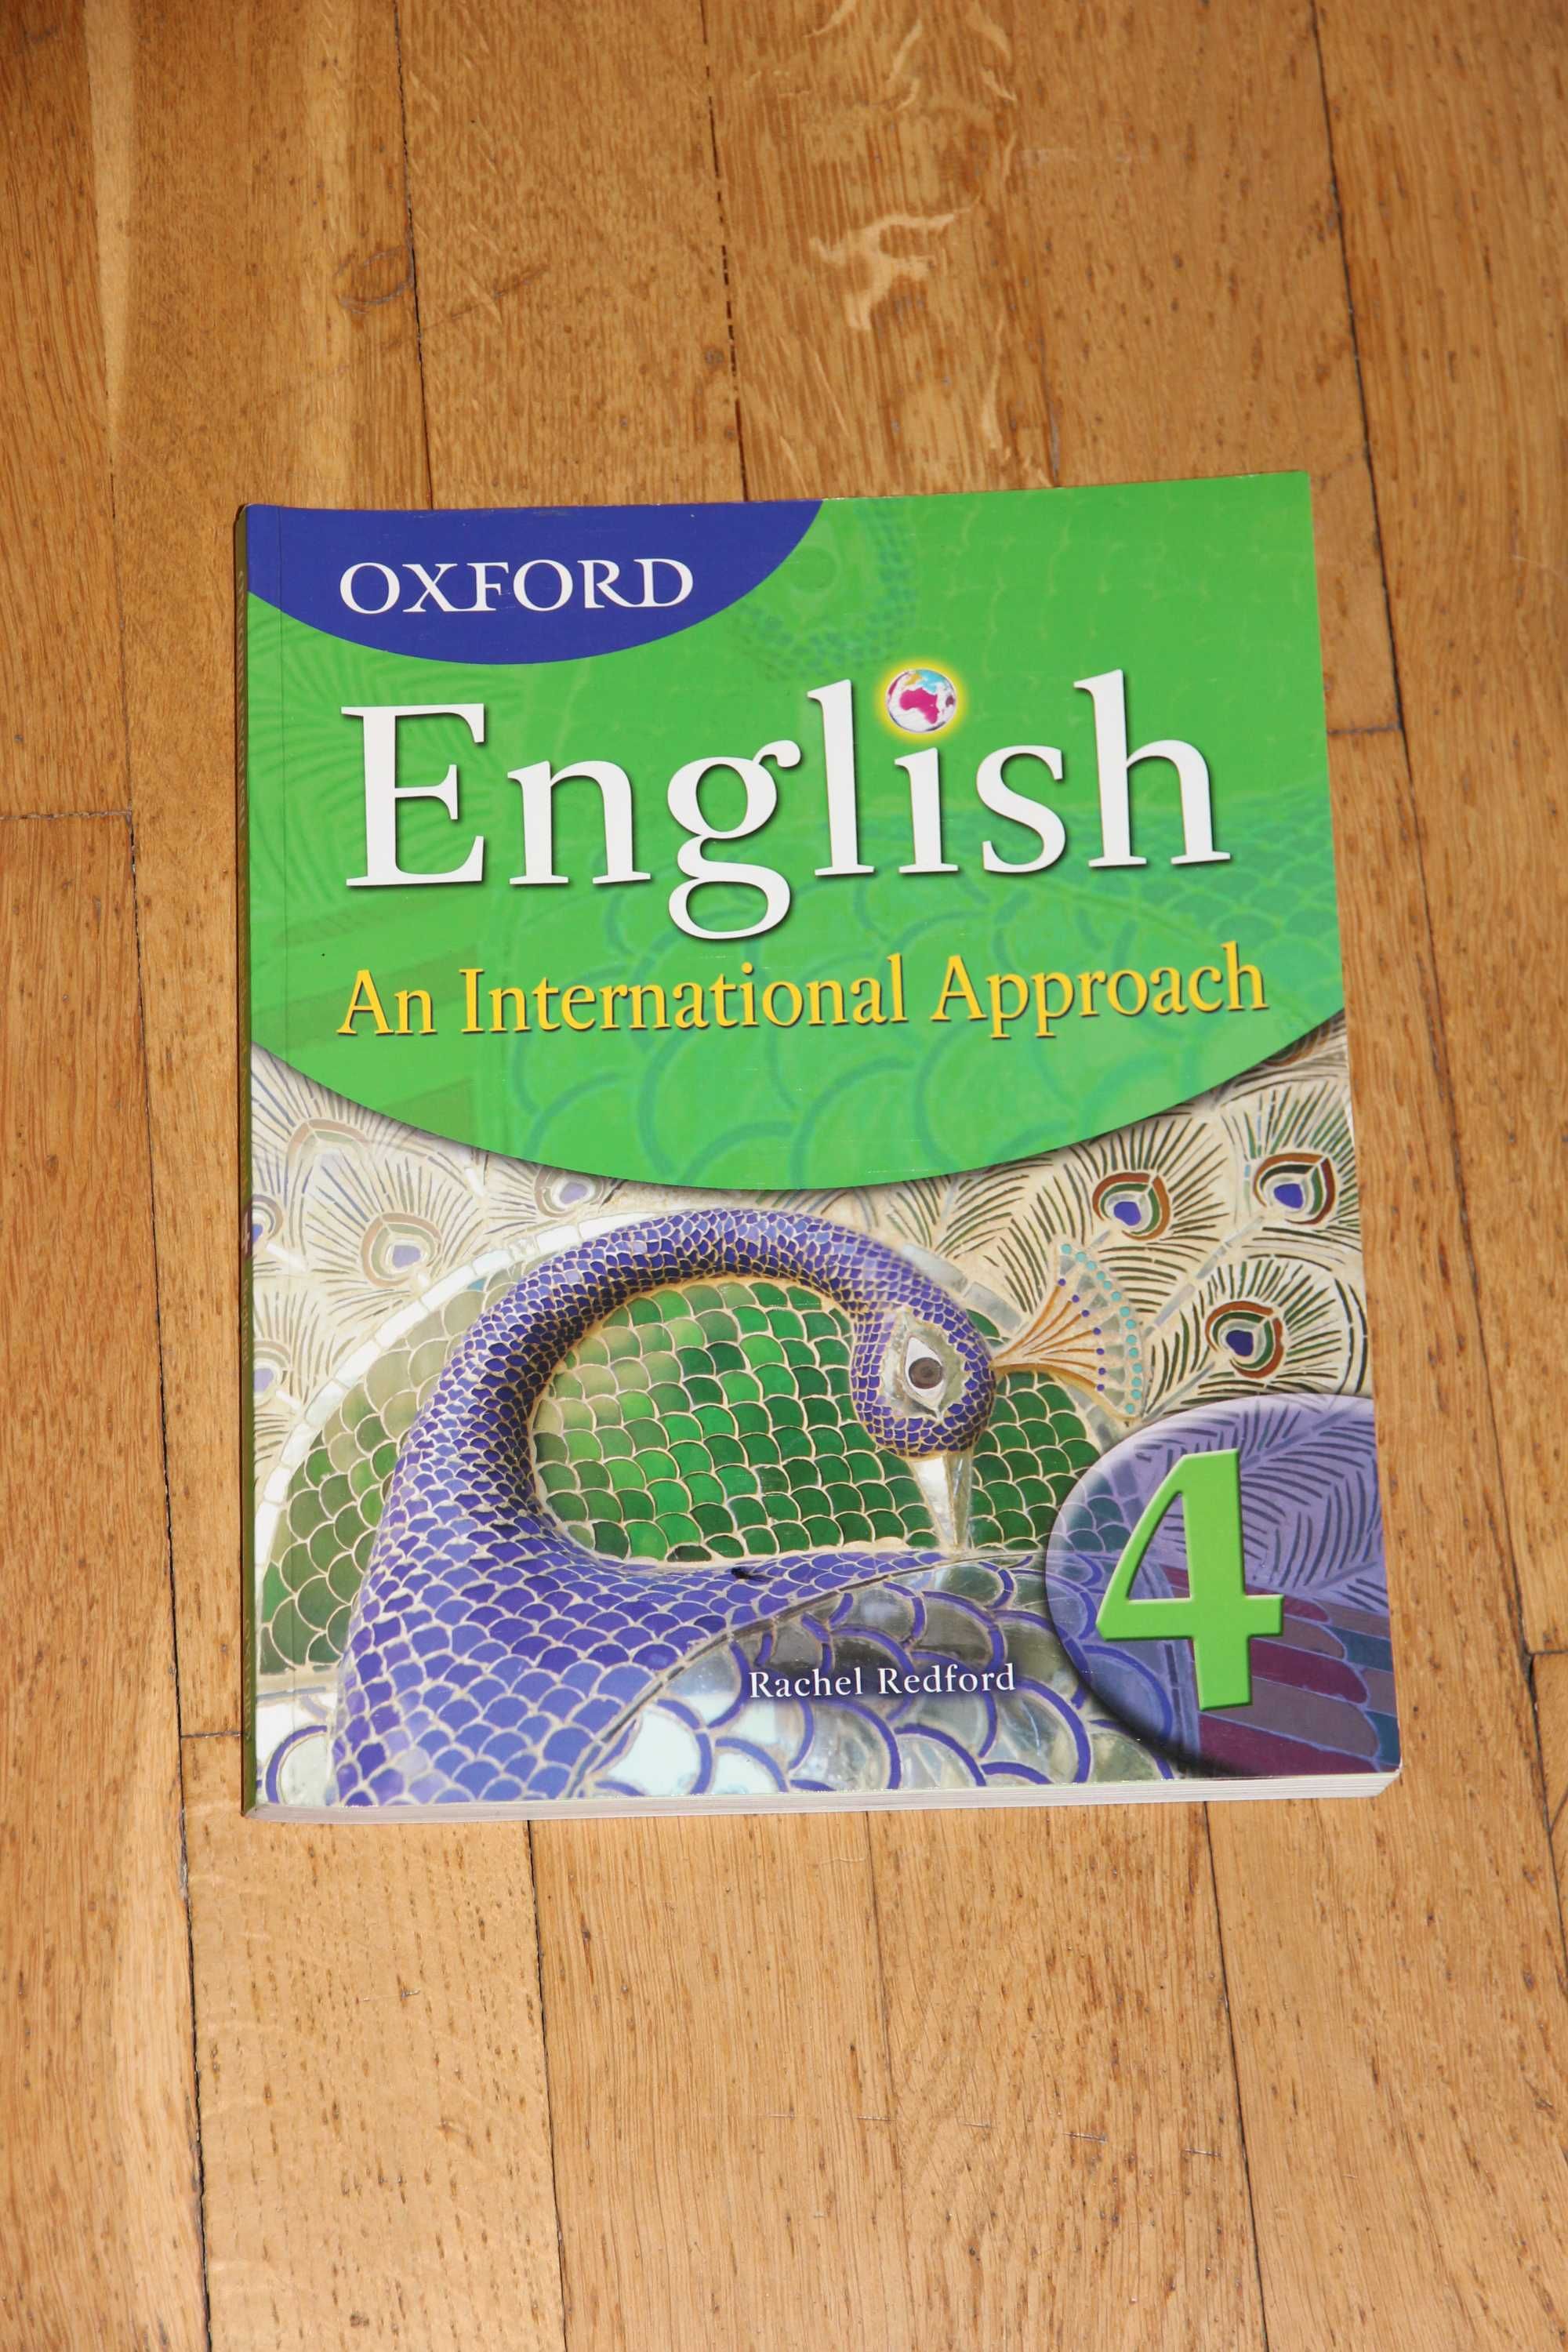 Oxford English: An International Approach Student Book 4